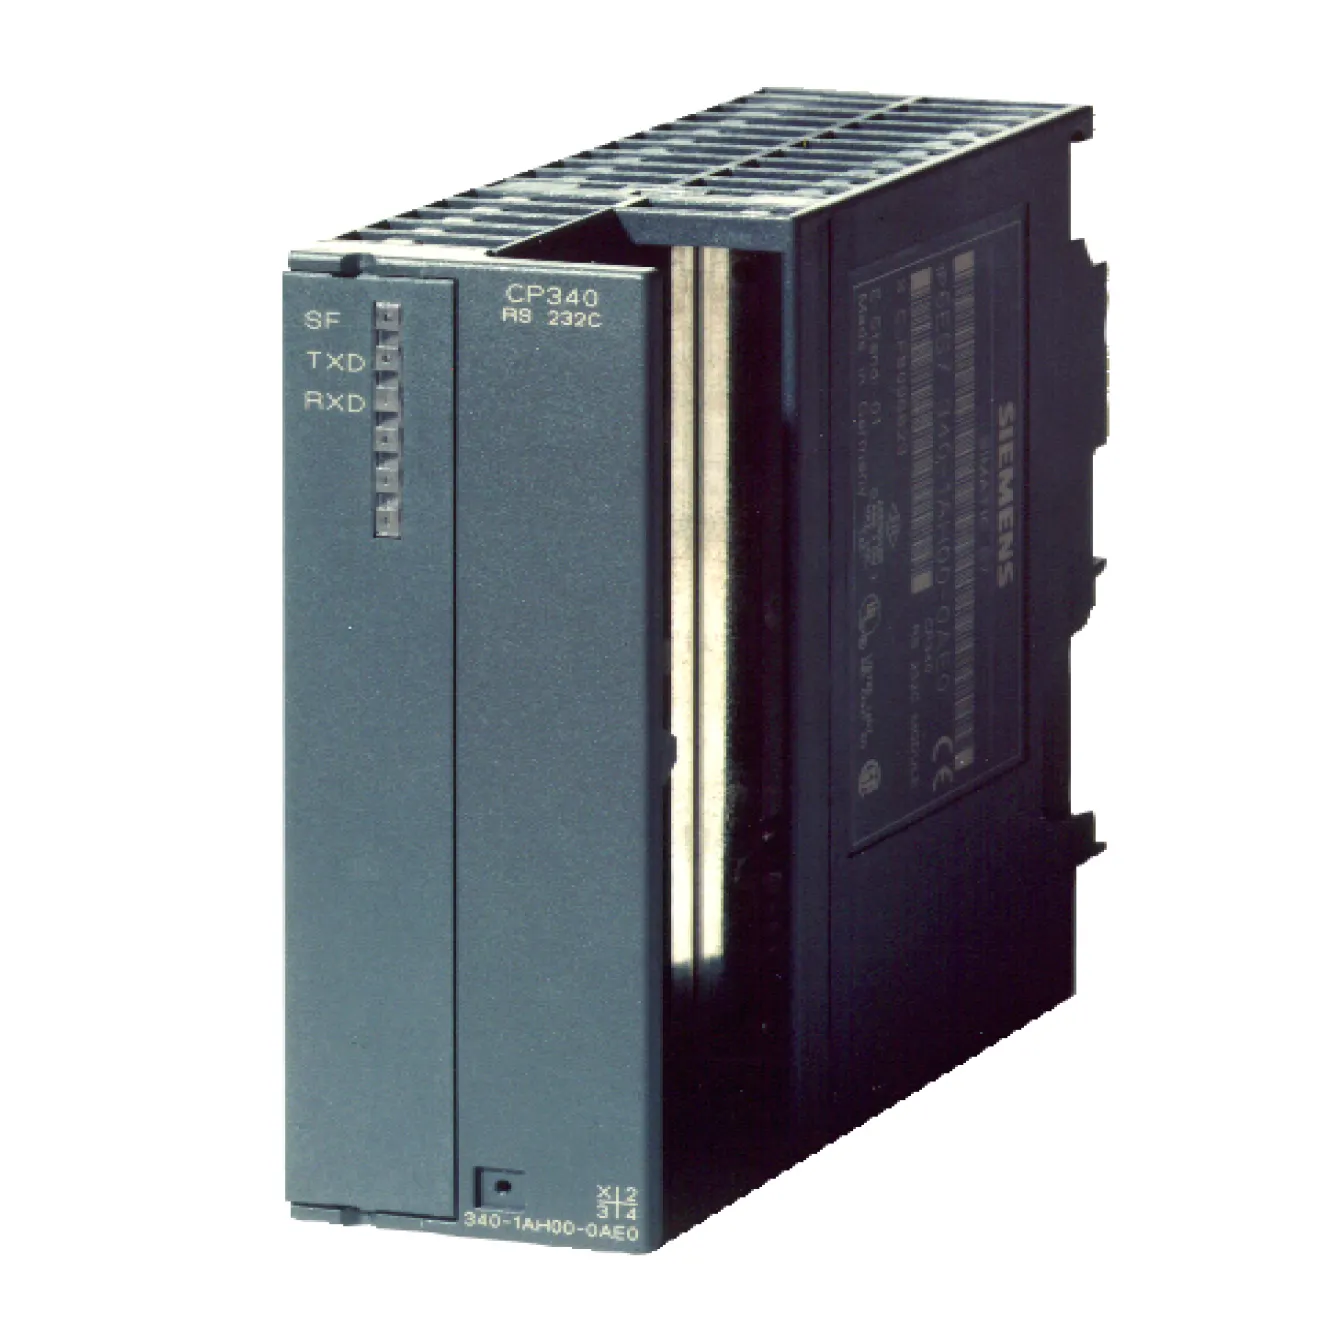 SIMATIC S7-300 CP 340 Kommunikation prozessor 6ES7340-1CH02-0AE0 mit RS 422/485 Schnitts telle inkl. 100% neues Original